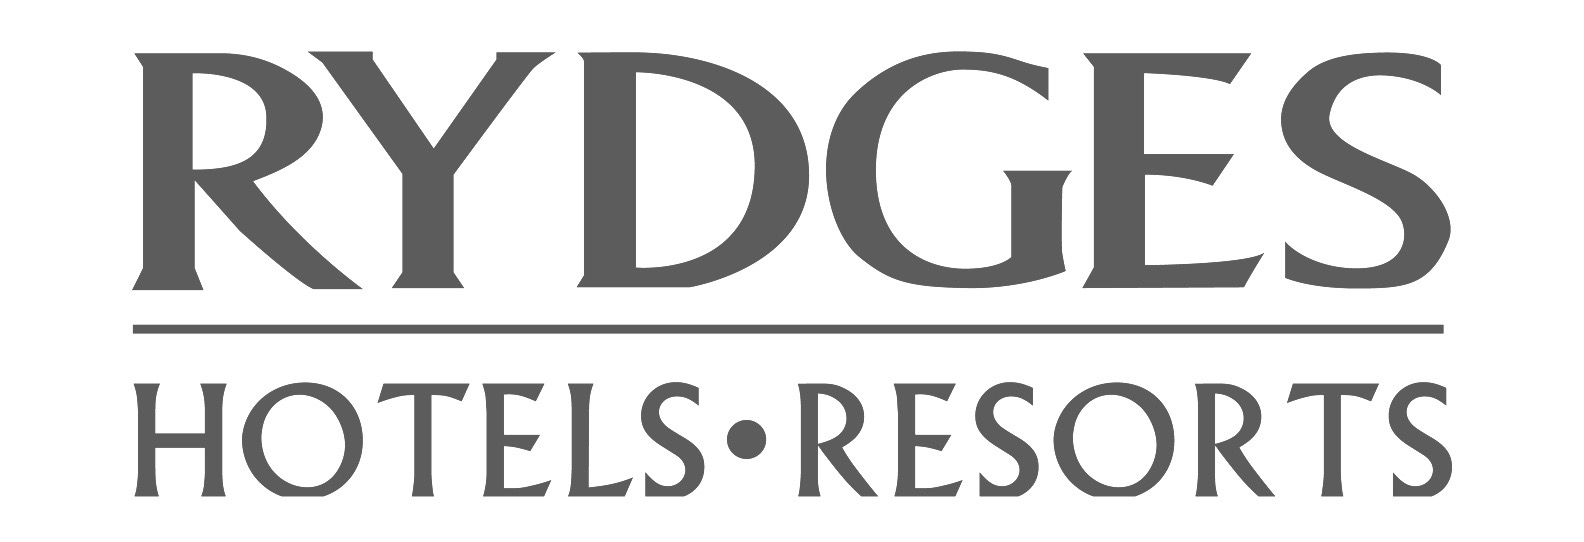 Rydges-Hotels-Resorts.jpg